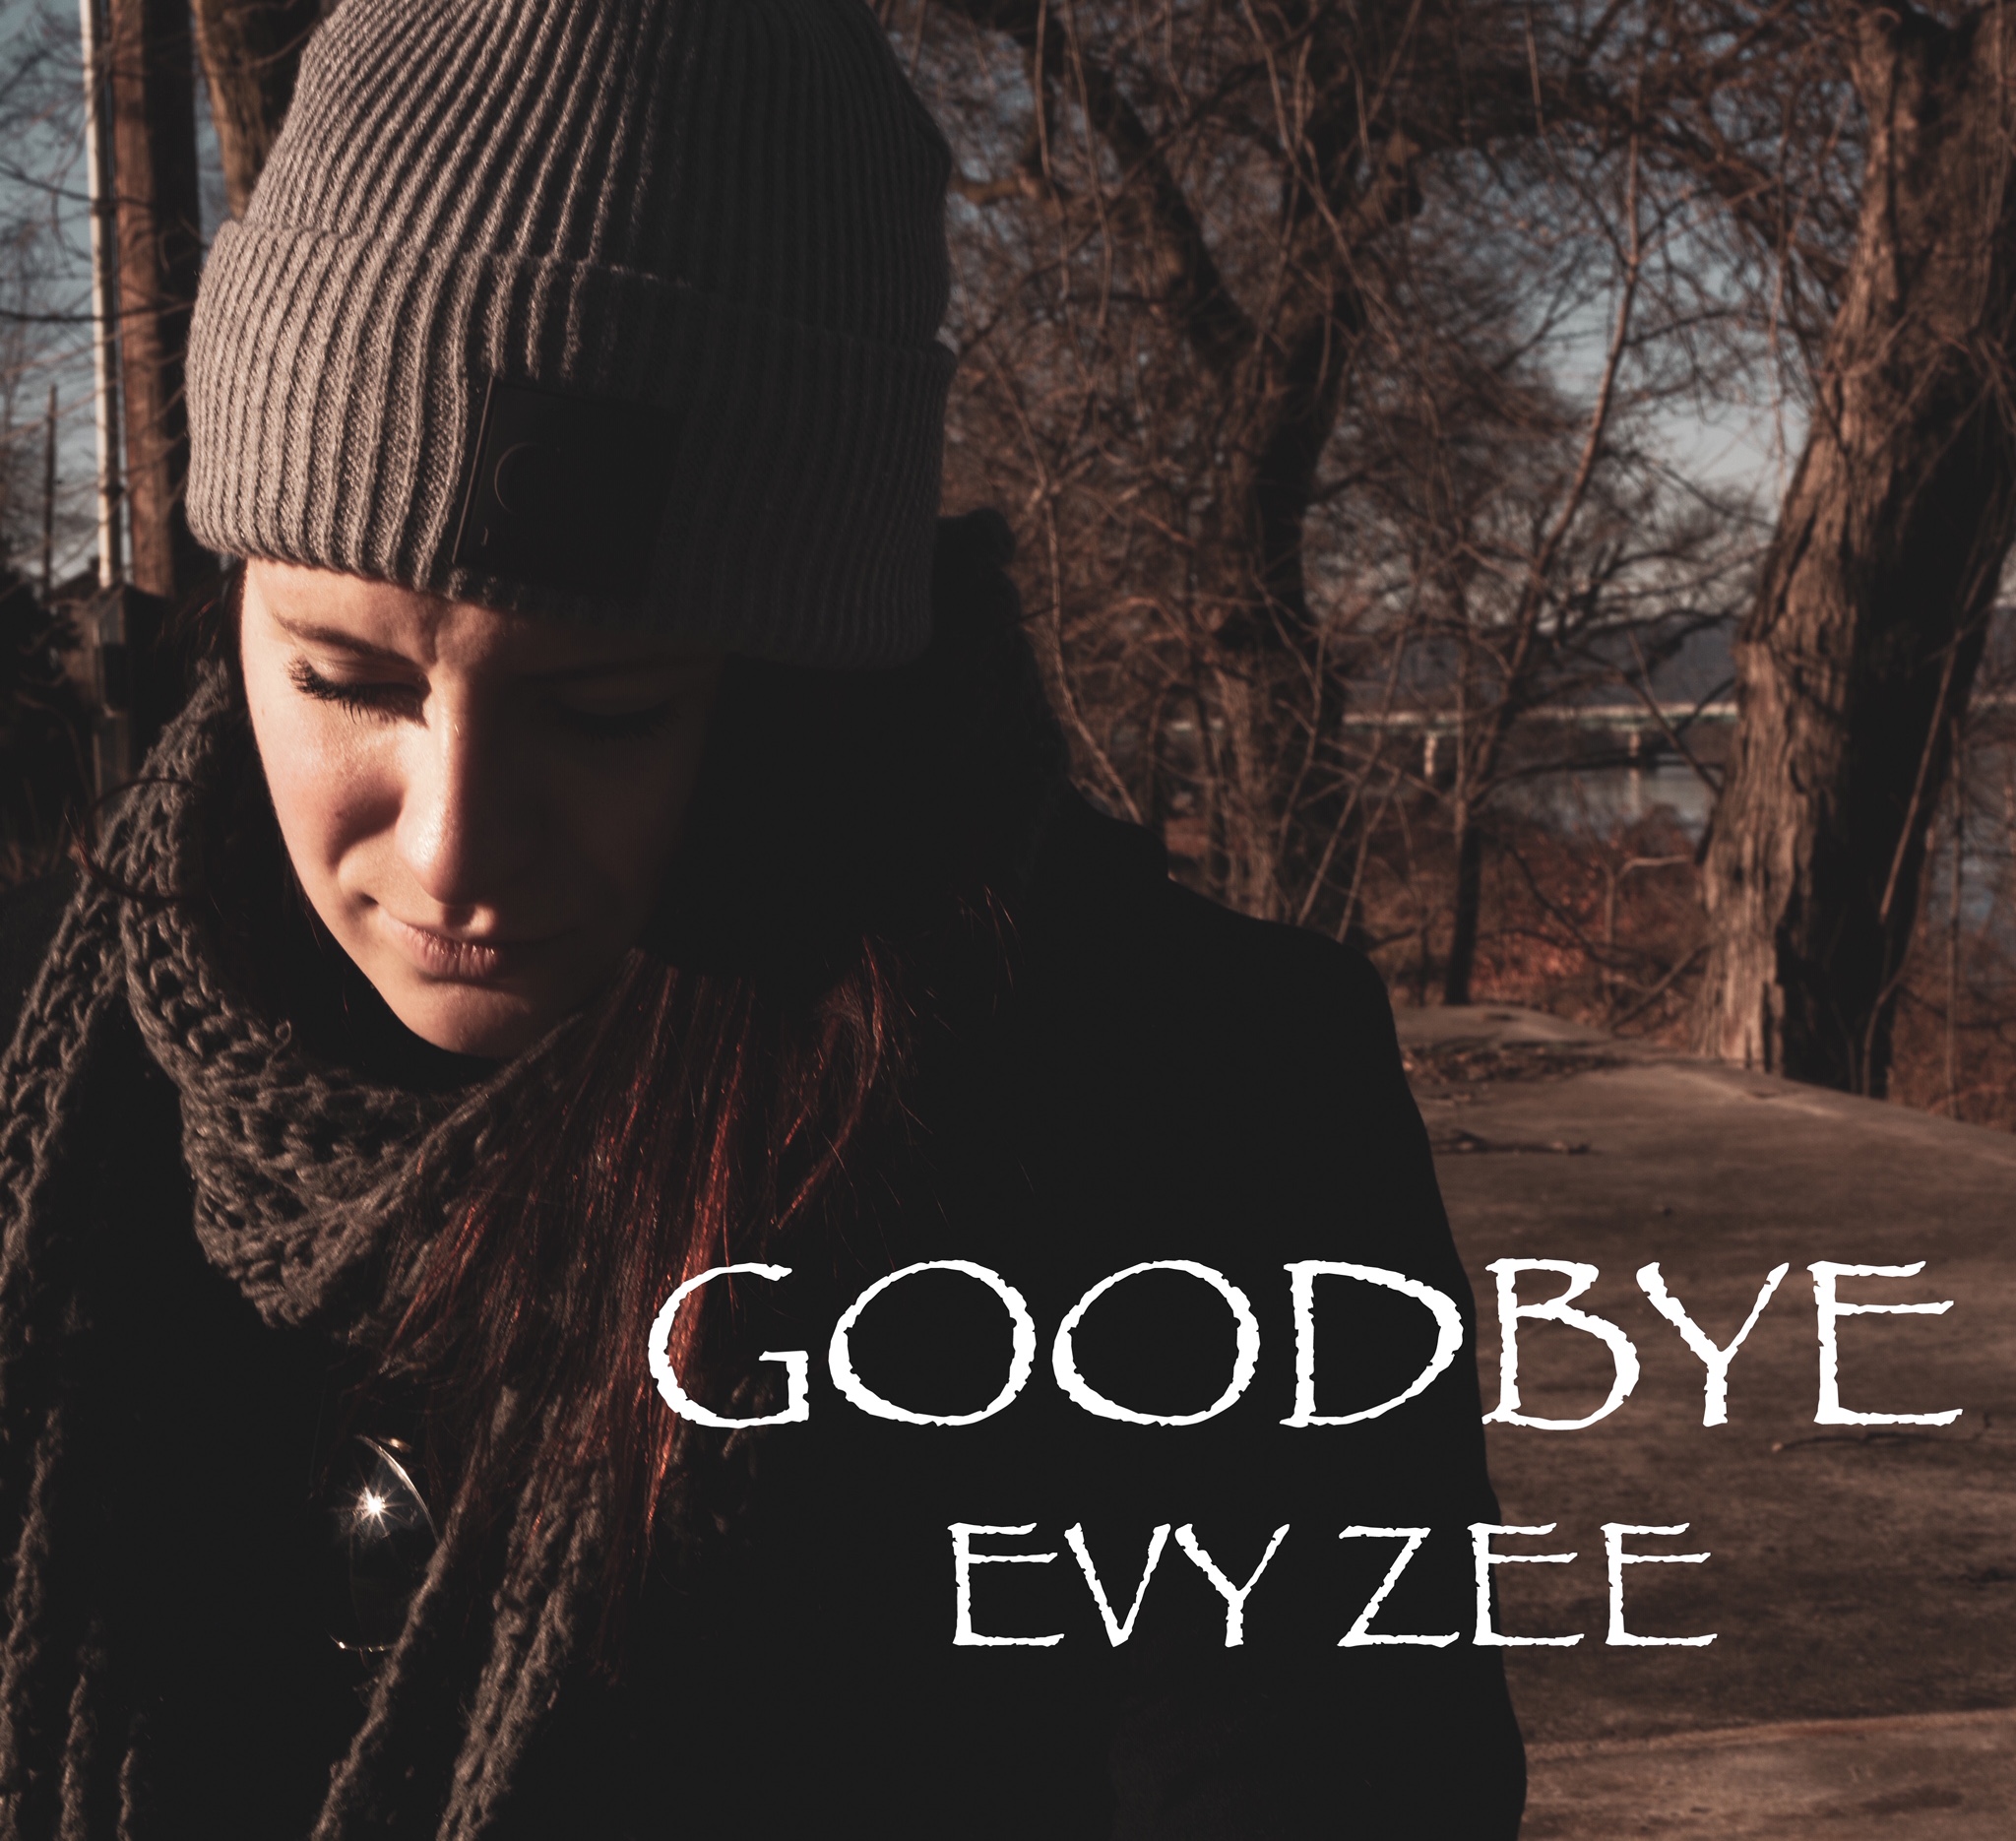 Evy Zee-New Single Release “Goodbye”